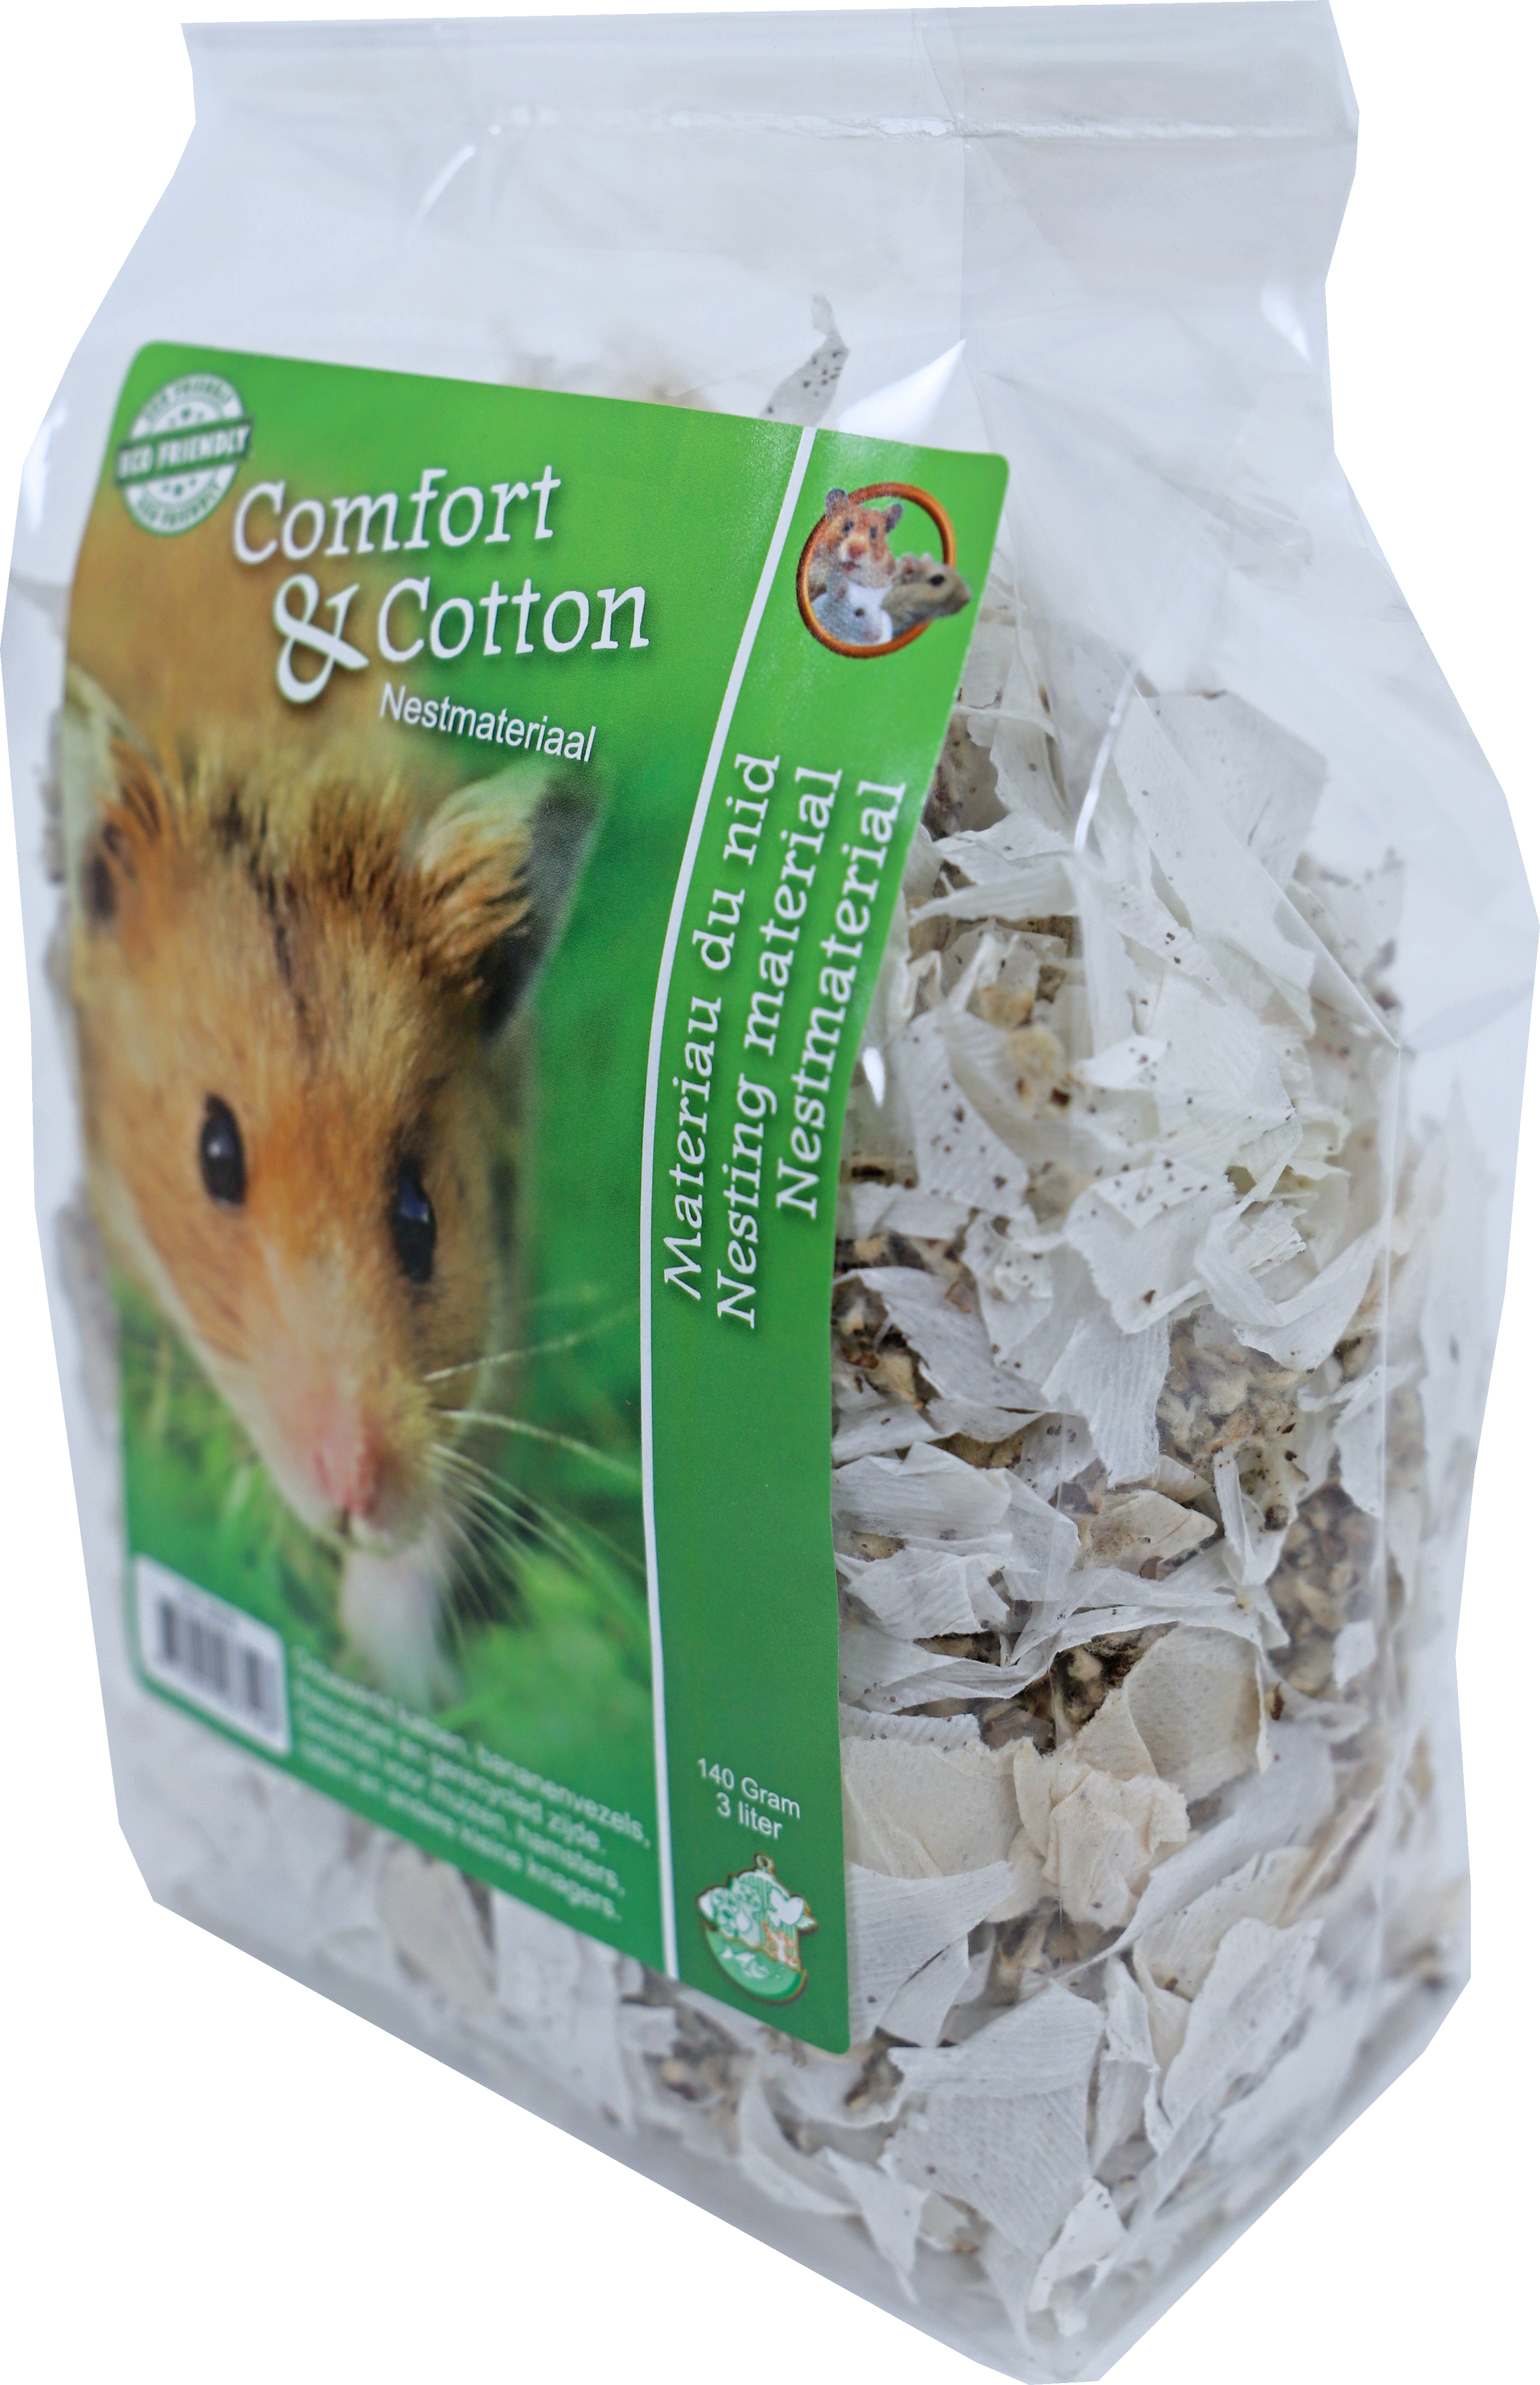 Nestmateriaal Eco Friendly Comfort & Cotton 140 gram